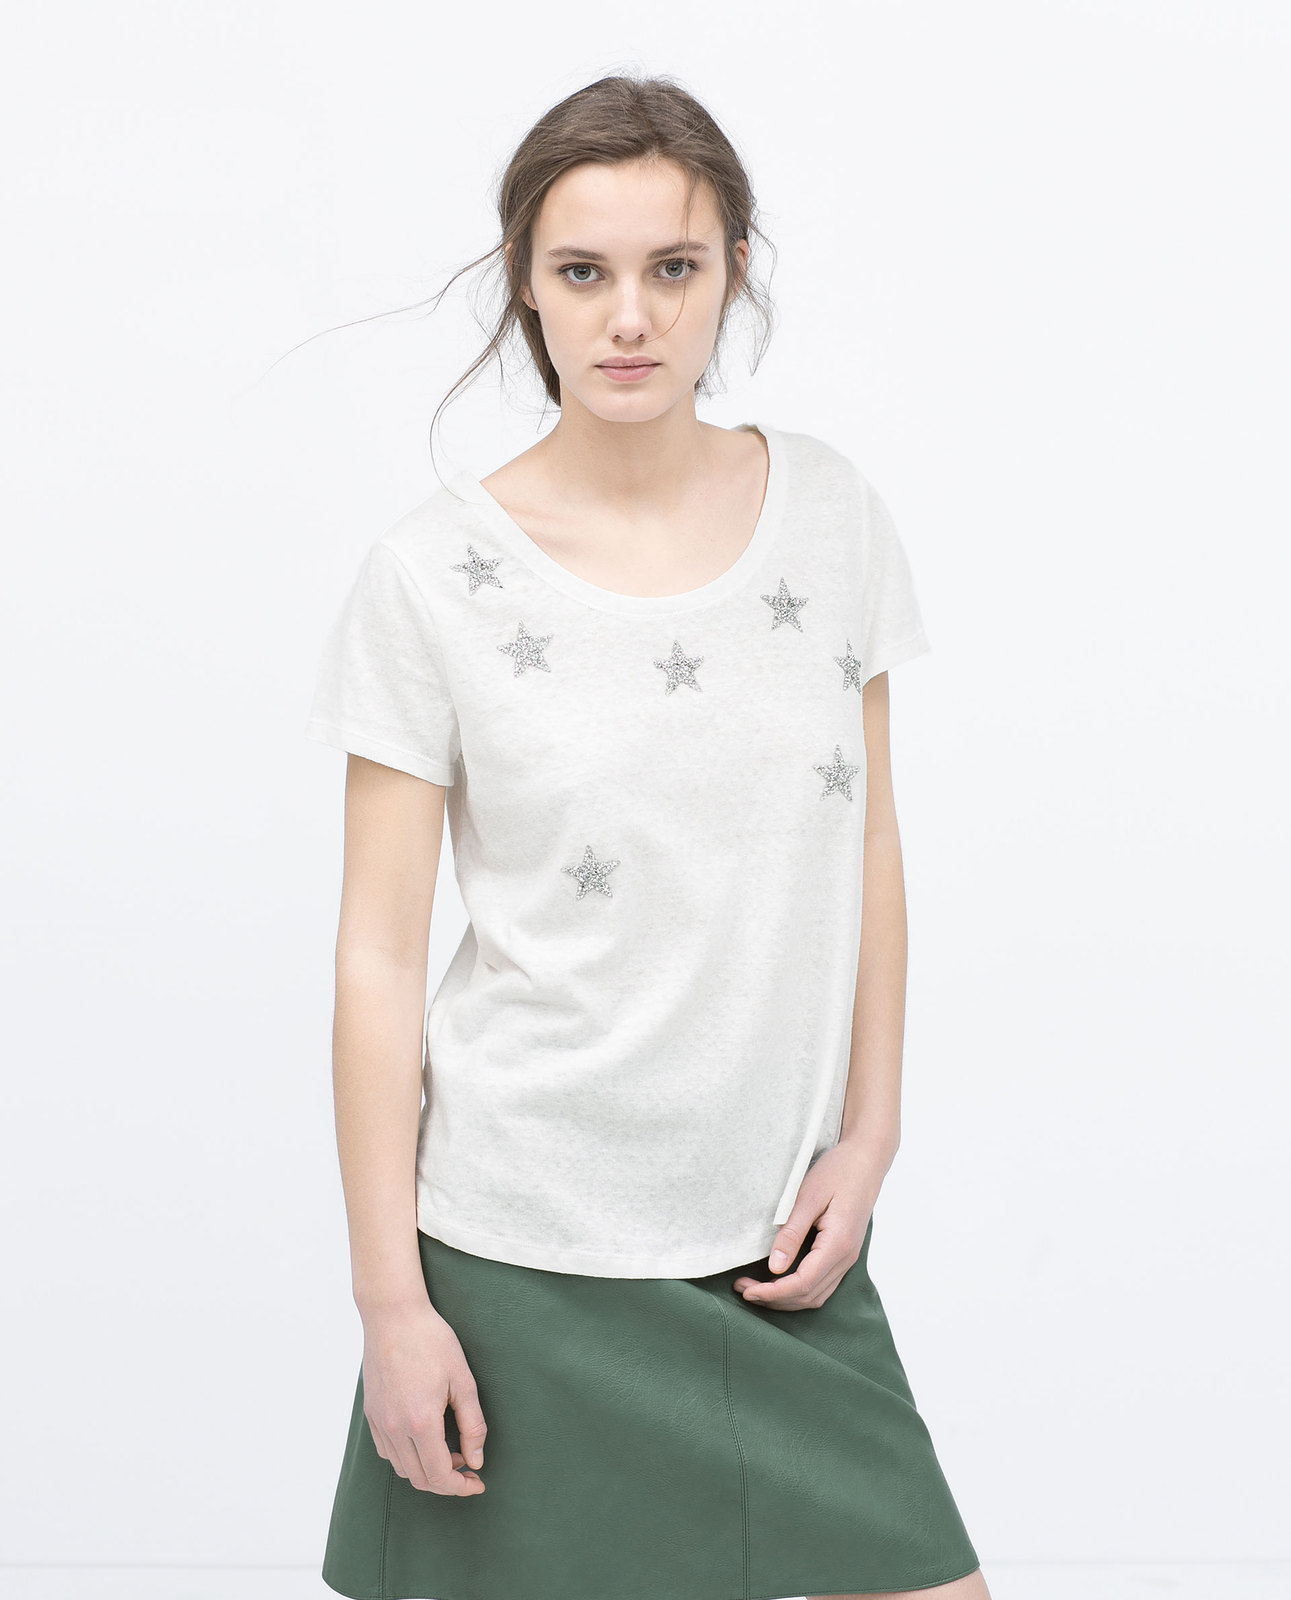 Zara csillagos fehér T-shirt 2015 fotója